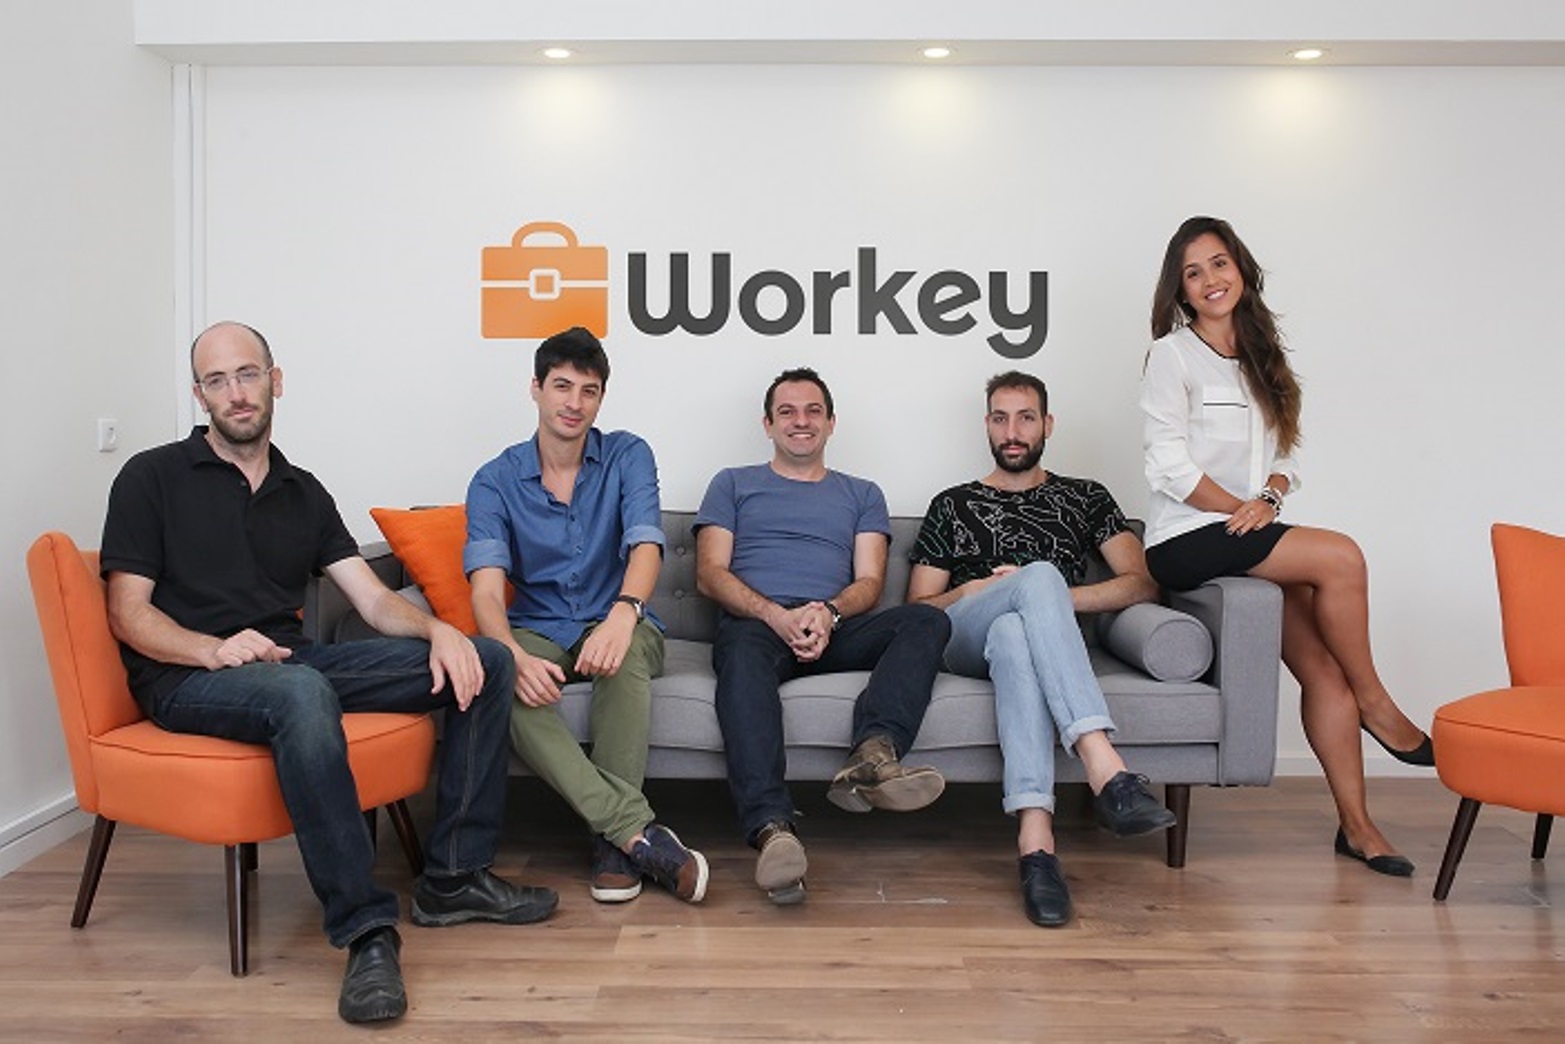 The Workey team. Photo by Omri Aharonov